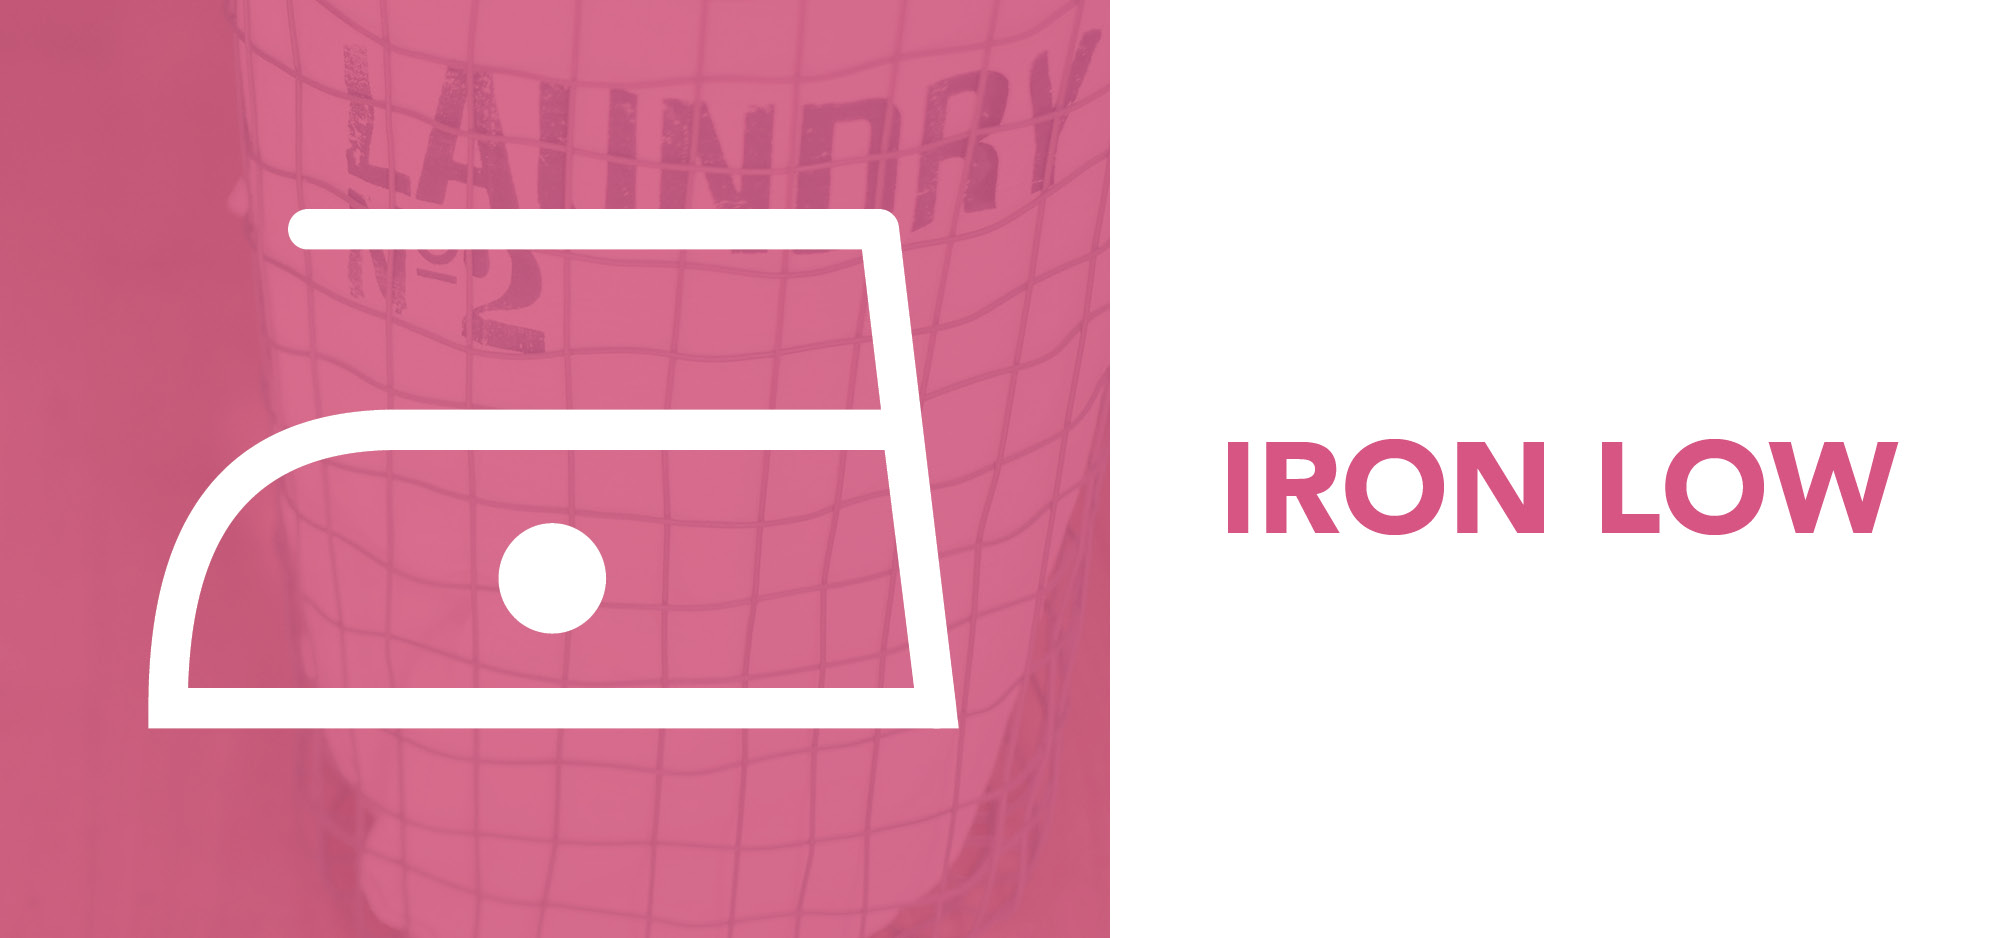 iron low symbol